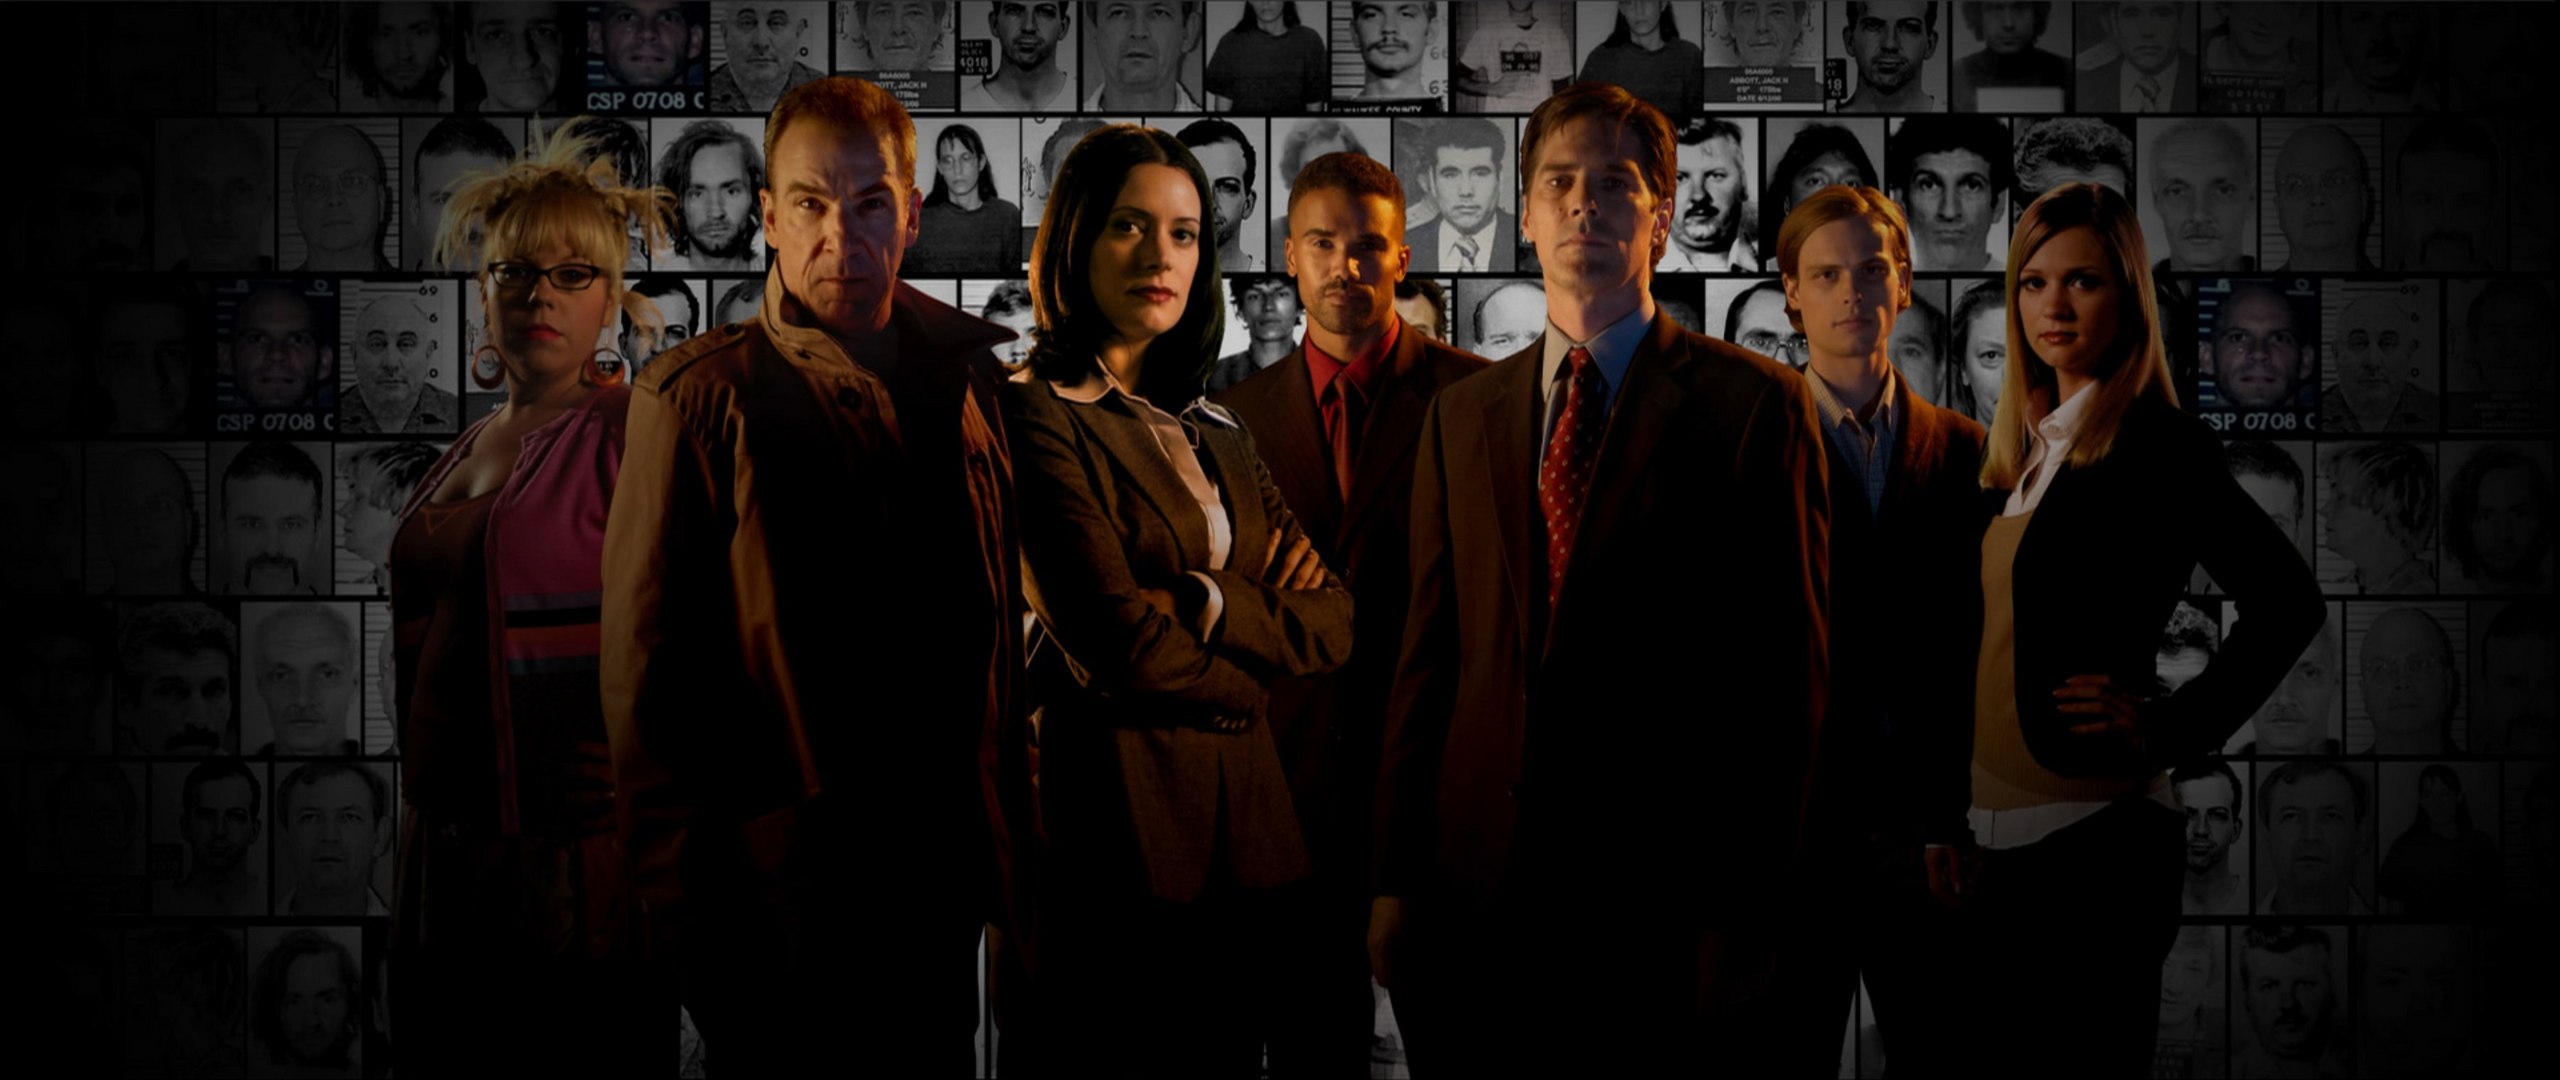 Mentes Criminales - Temporada 1 - Dual + Sub - HD (2005)